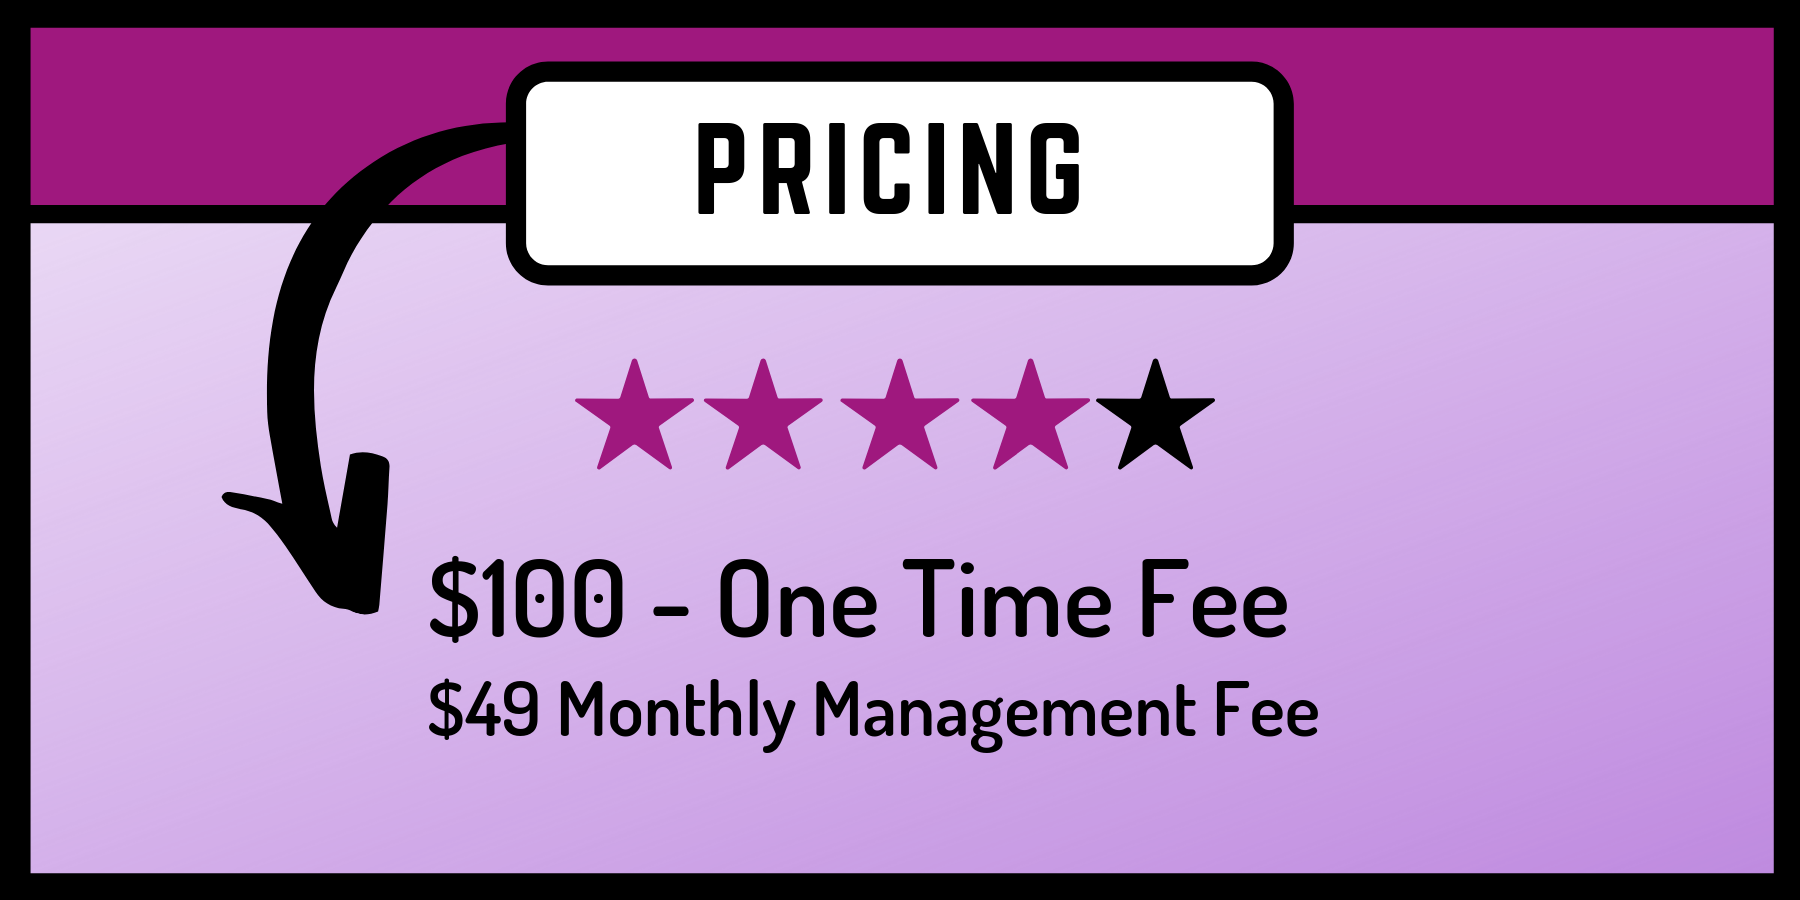 Reputation Management Pricing